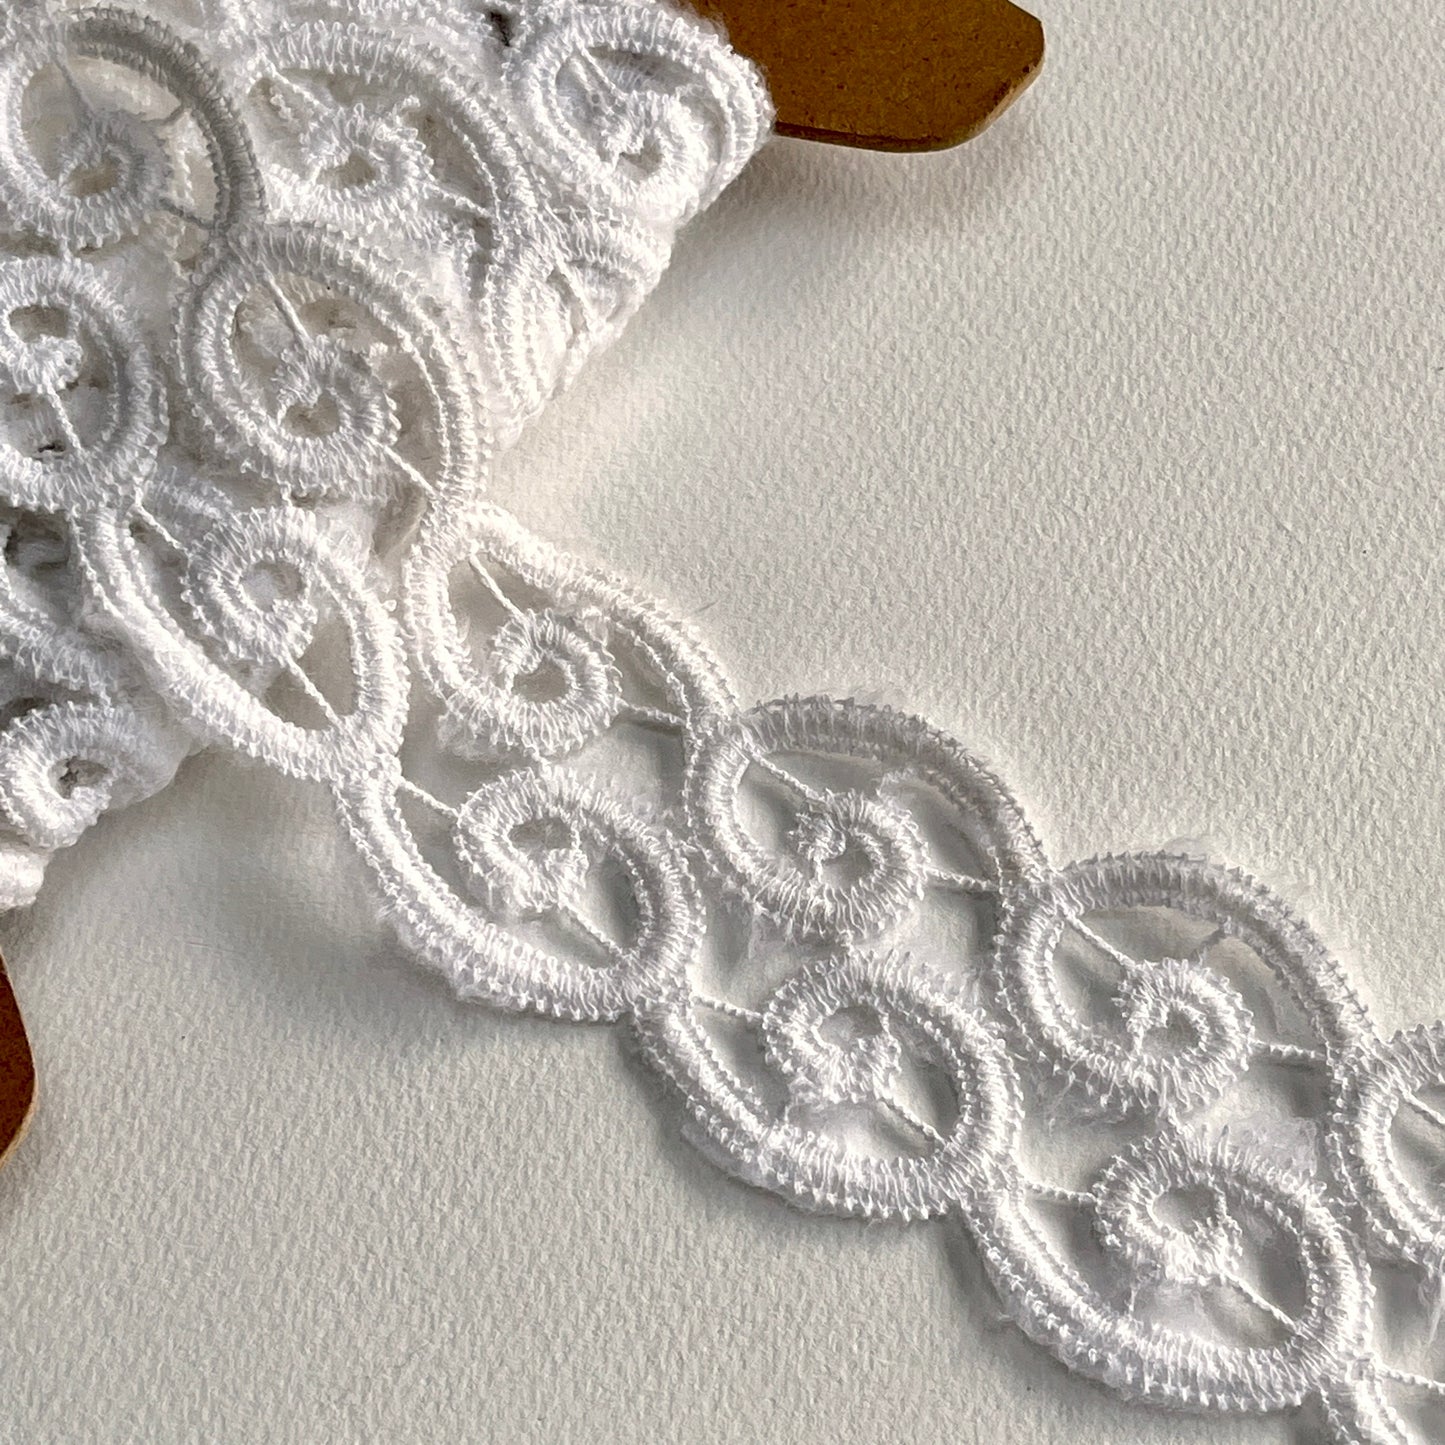 Off-white lace border trim with delicate scroll design and scalloped edge.